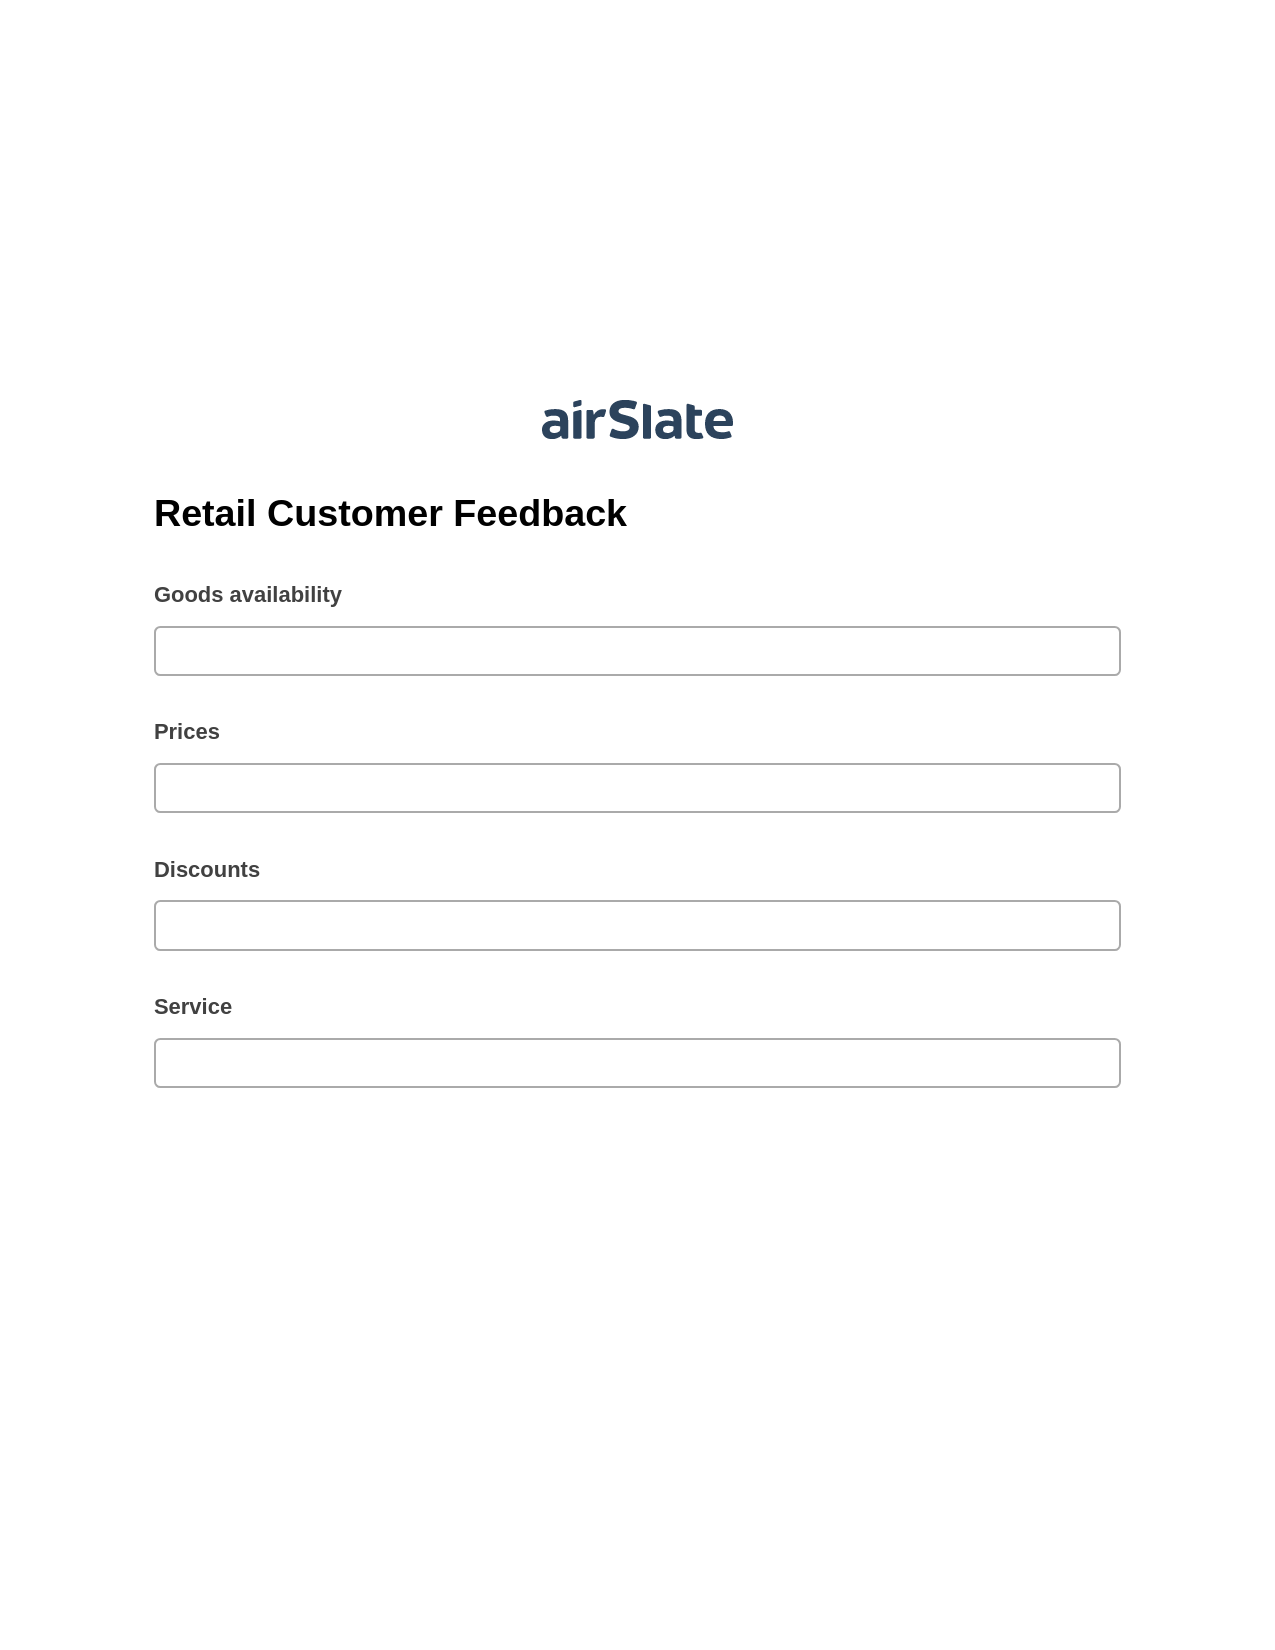 Retail Customer Feedback Pre-fill Document Bot, SendGrid send Campaign bot, Box Bot